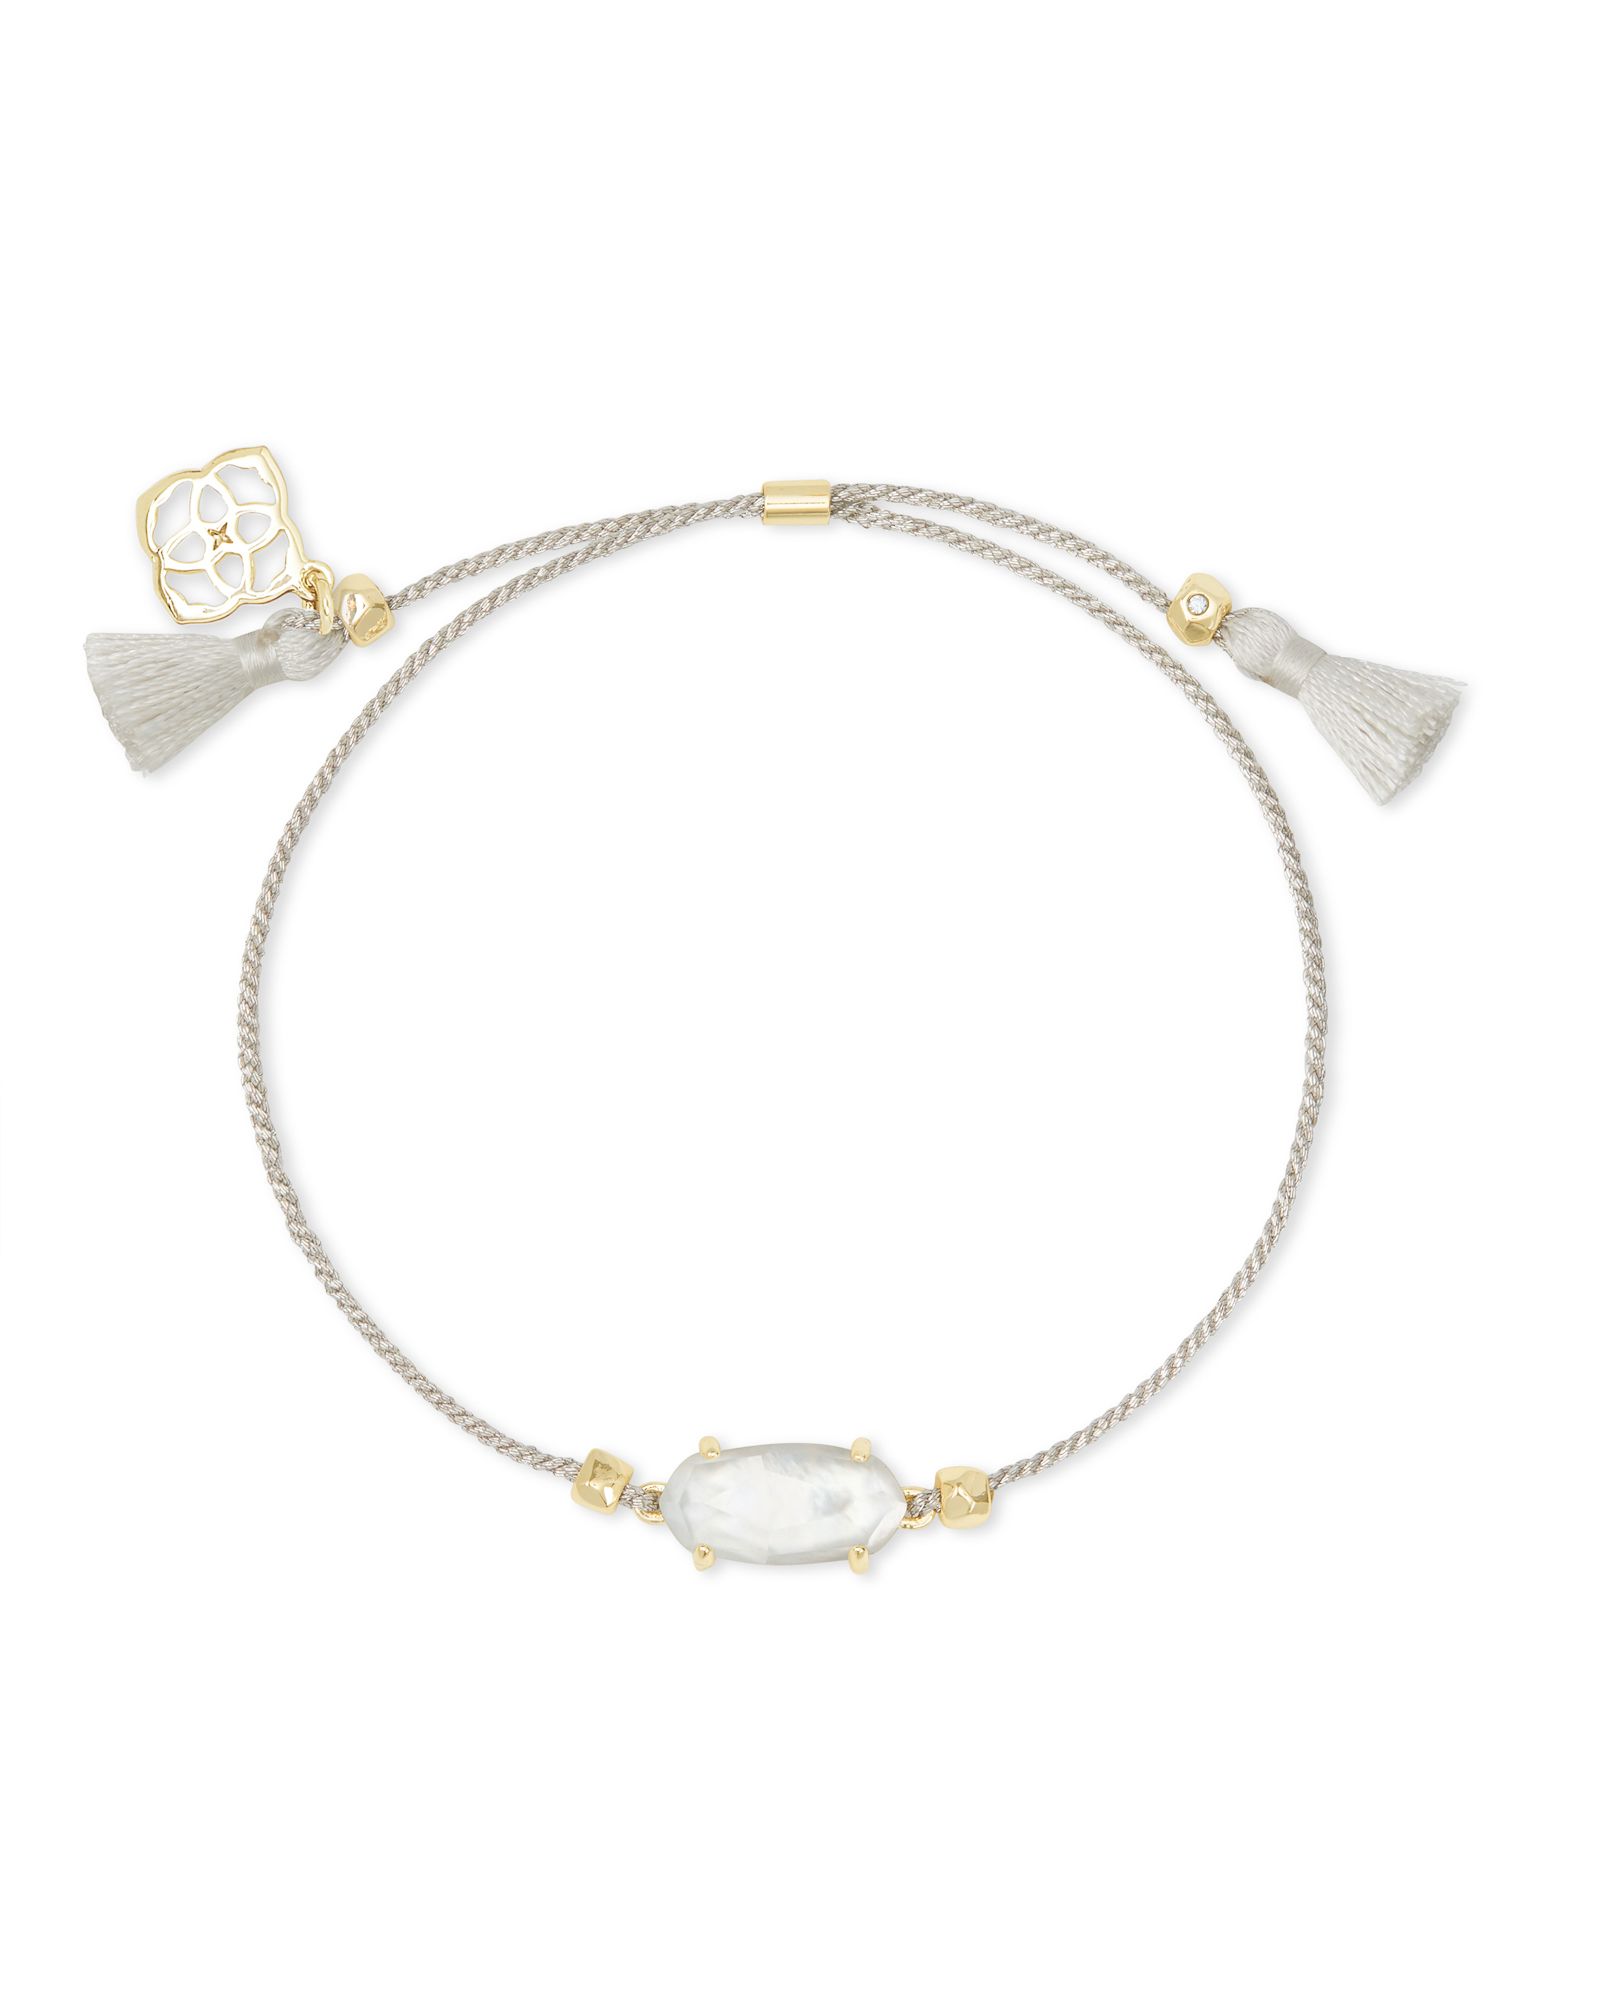 Everlyne Silver Cord Friendship Bracelet in Ivory Mother-of-Pearl | Kendra Scott